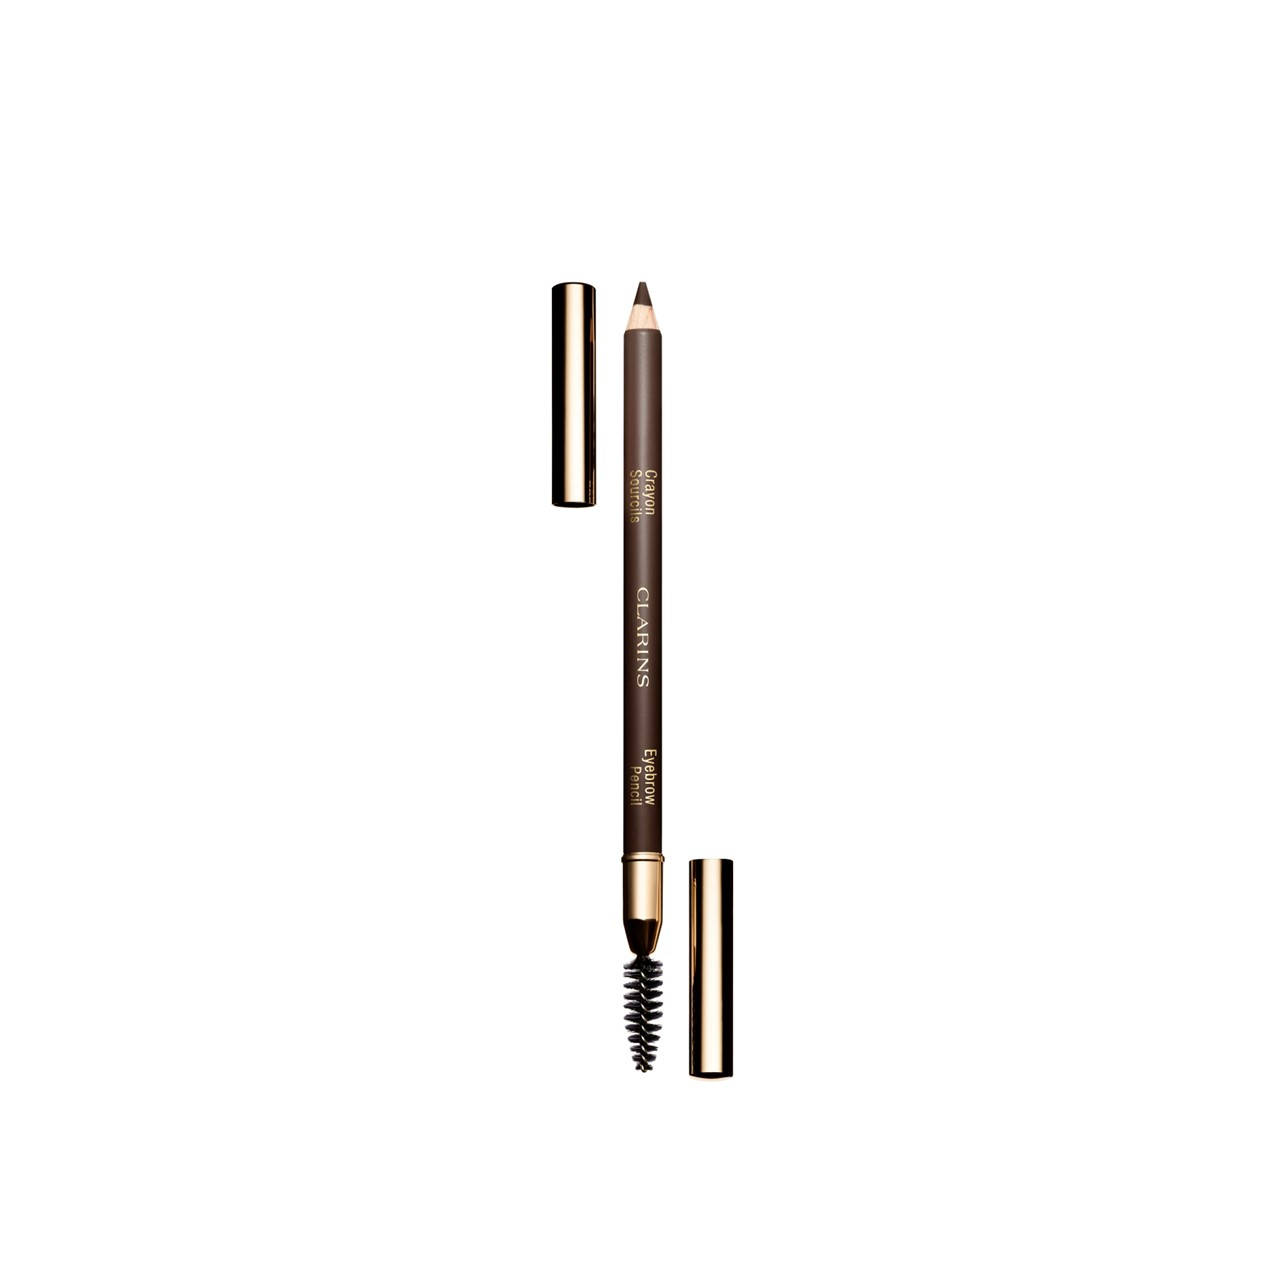 Clarins Eyebrow Pencil Long-Wearing 02 Light Brown 1.1g